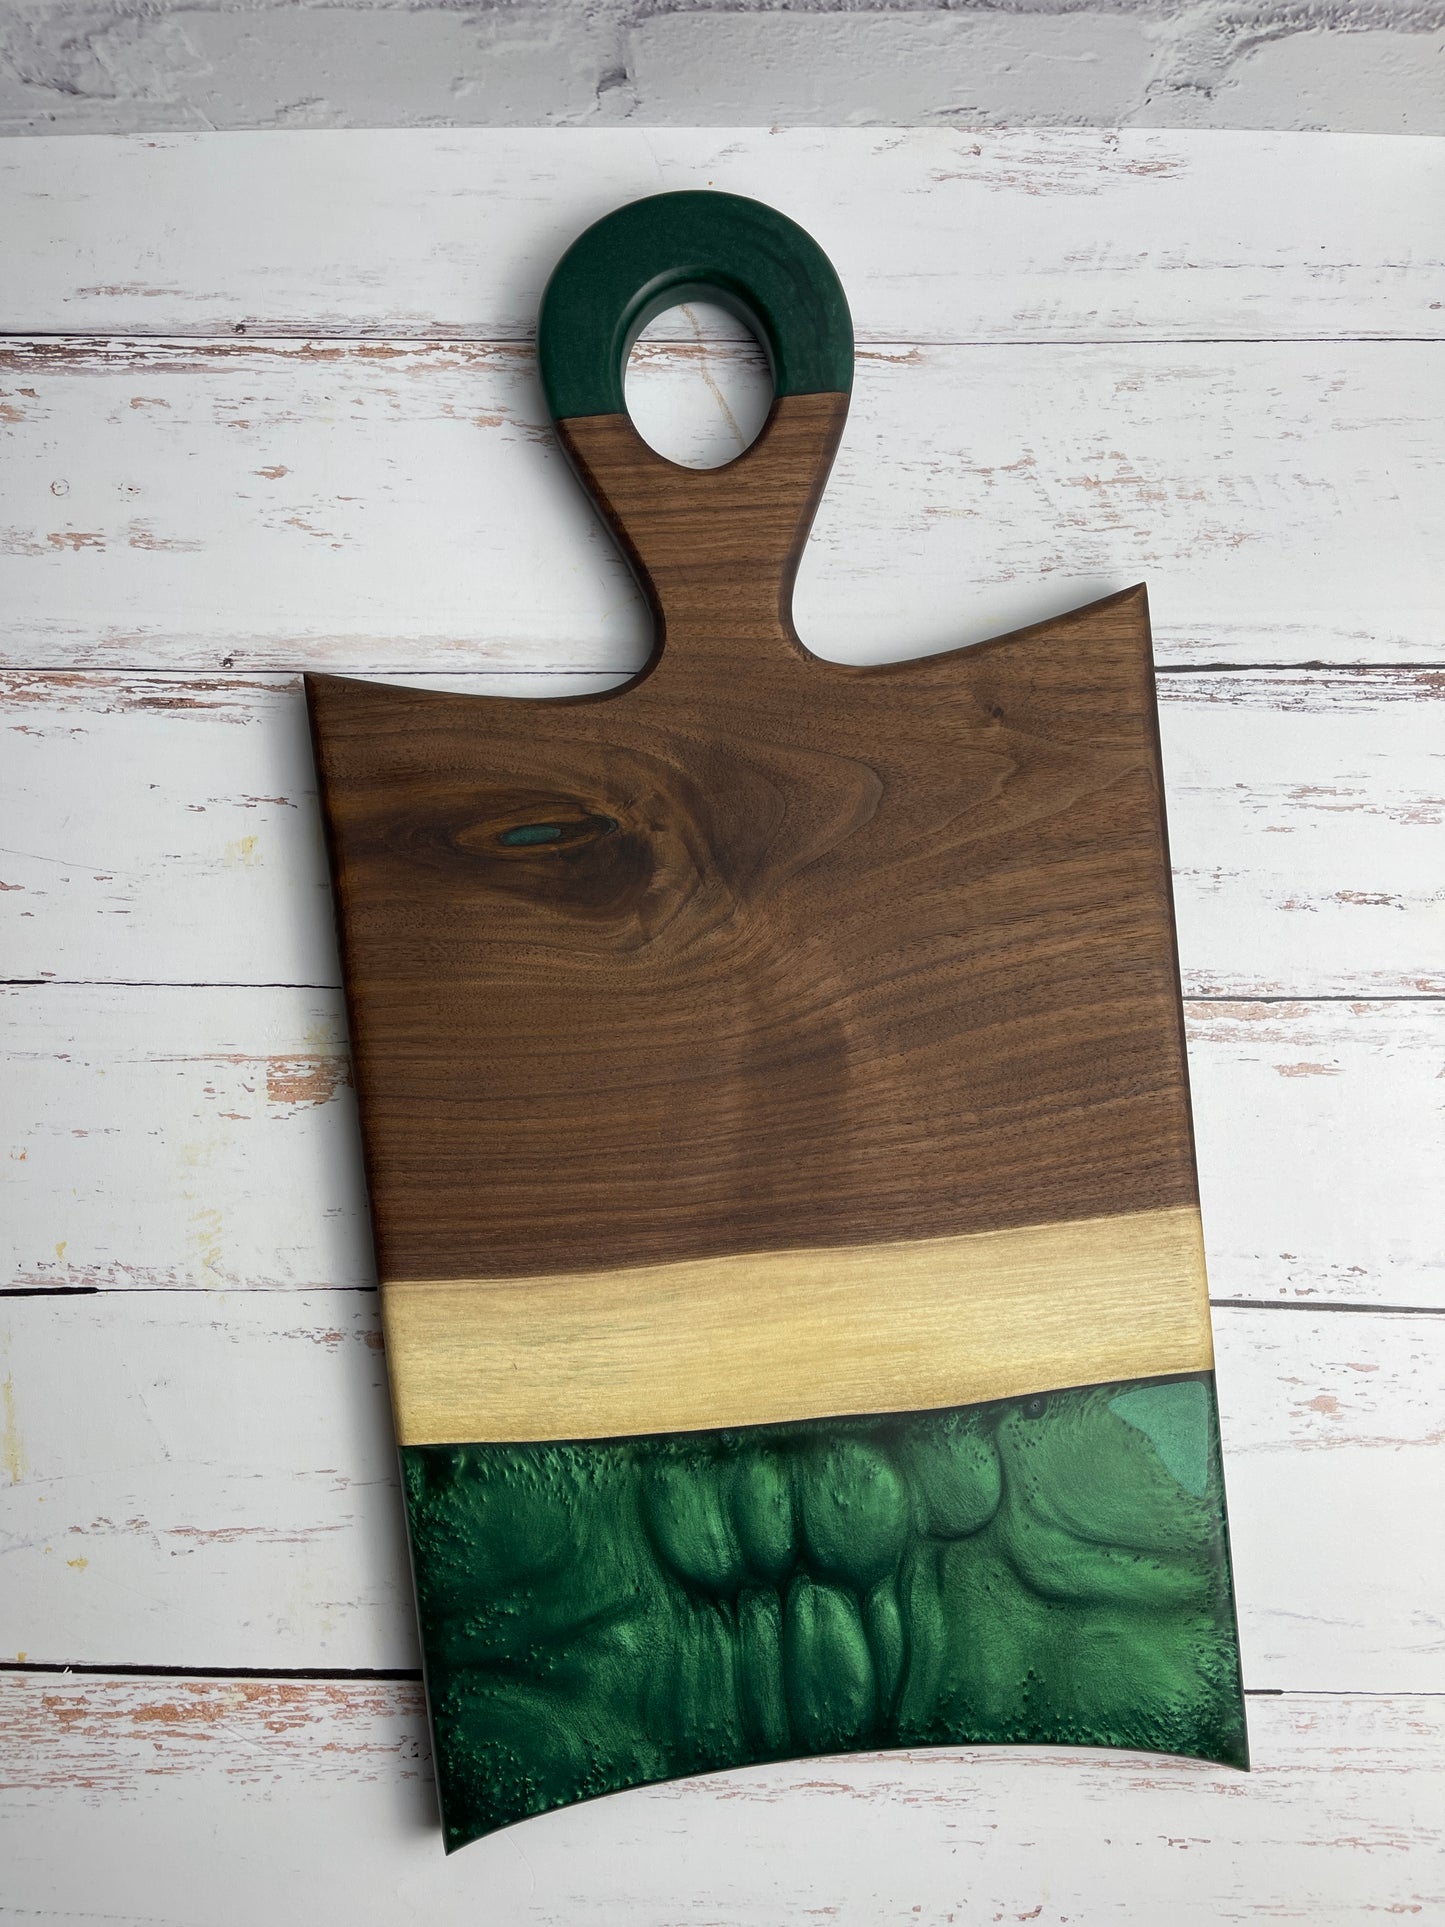 Black walnut and green resin charcuterie board